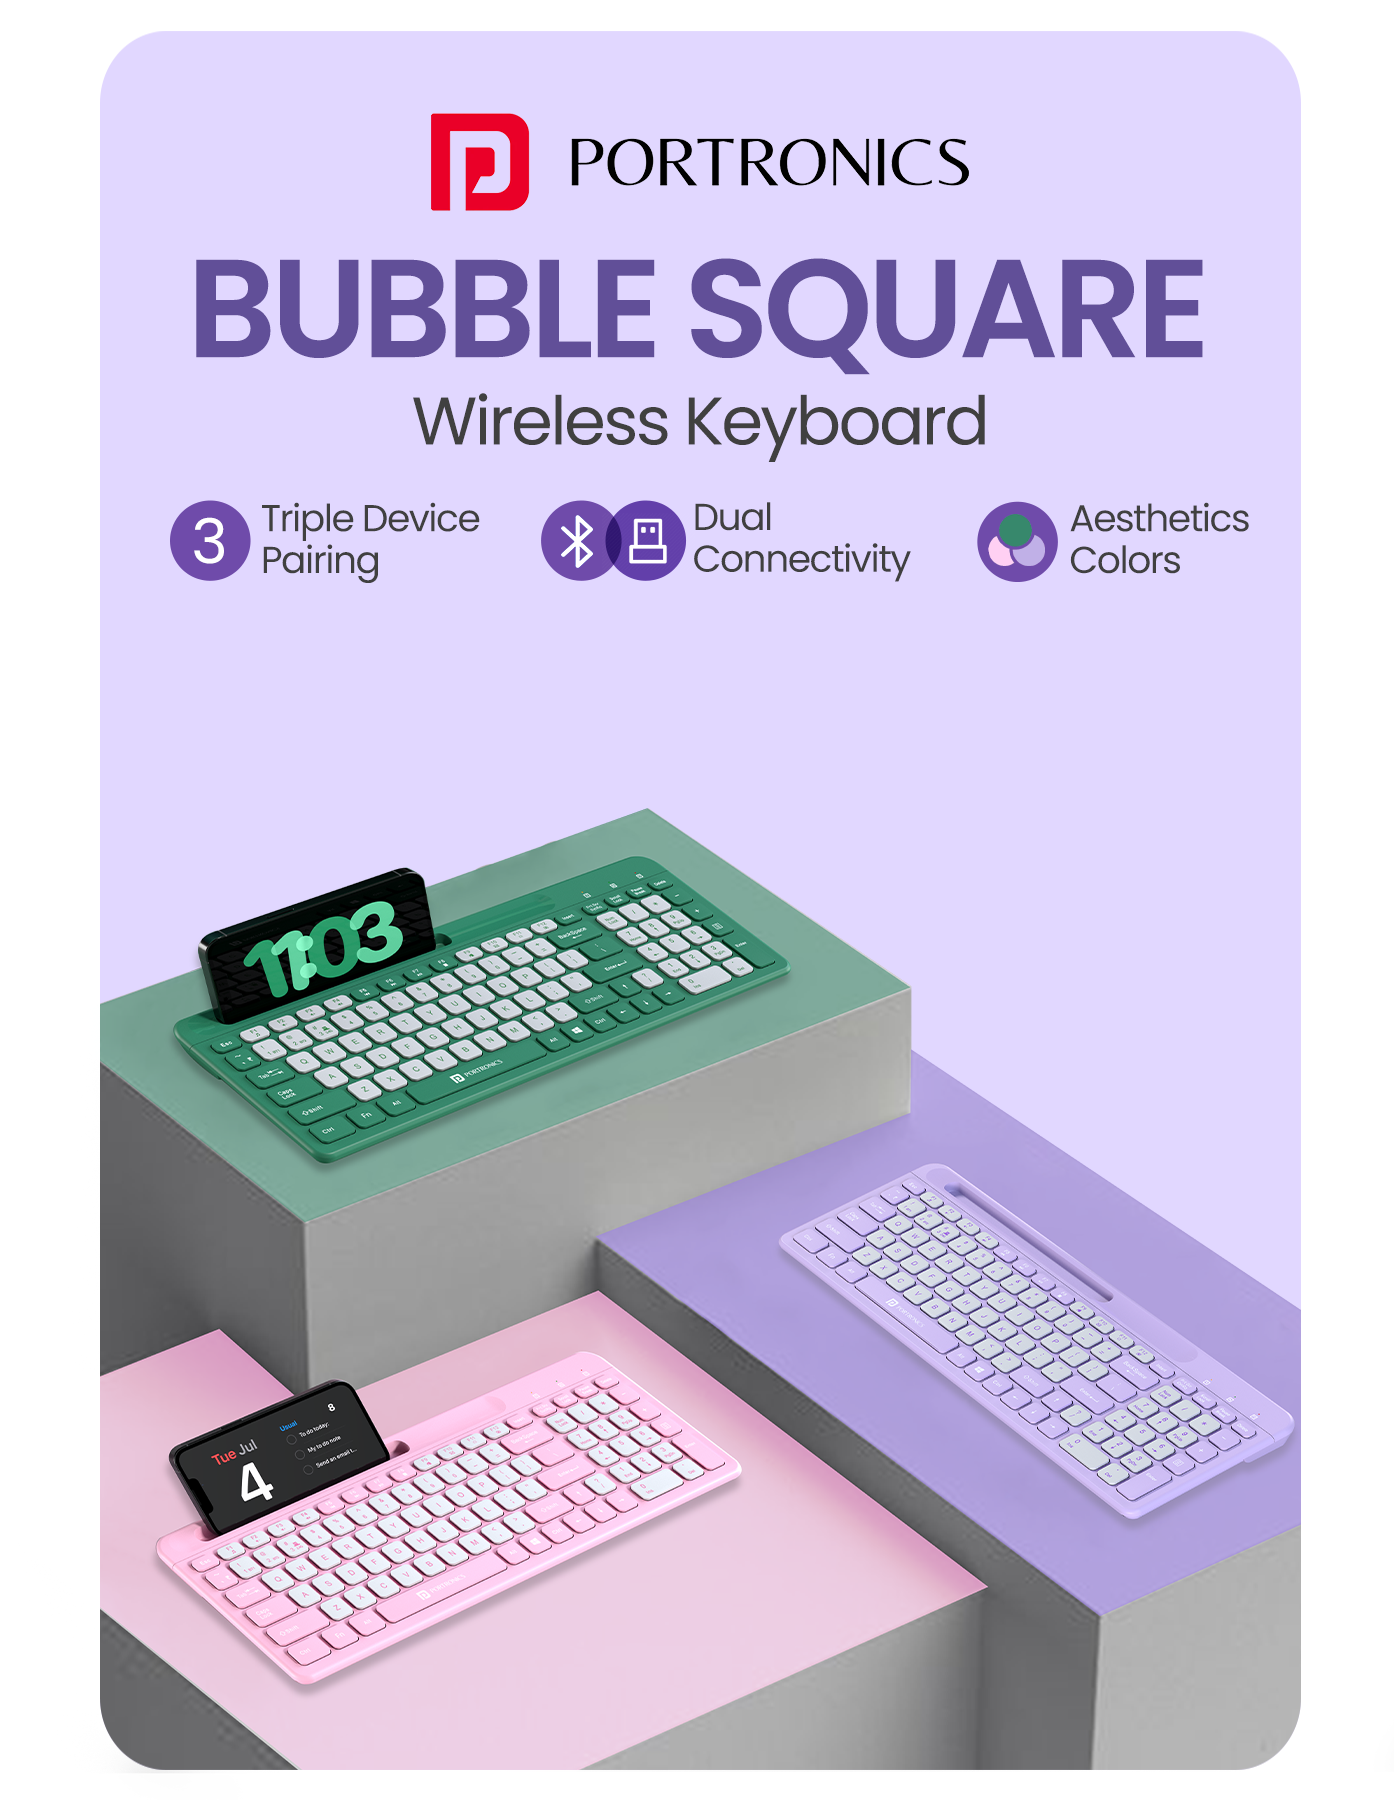 Portronics Bubble Square laptop Wireless keyboard upto 10 meter range